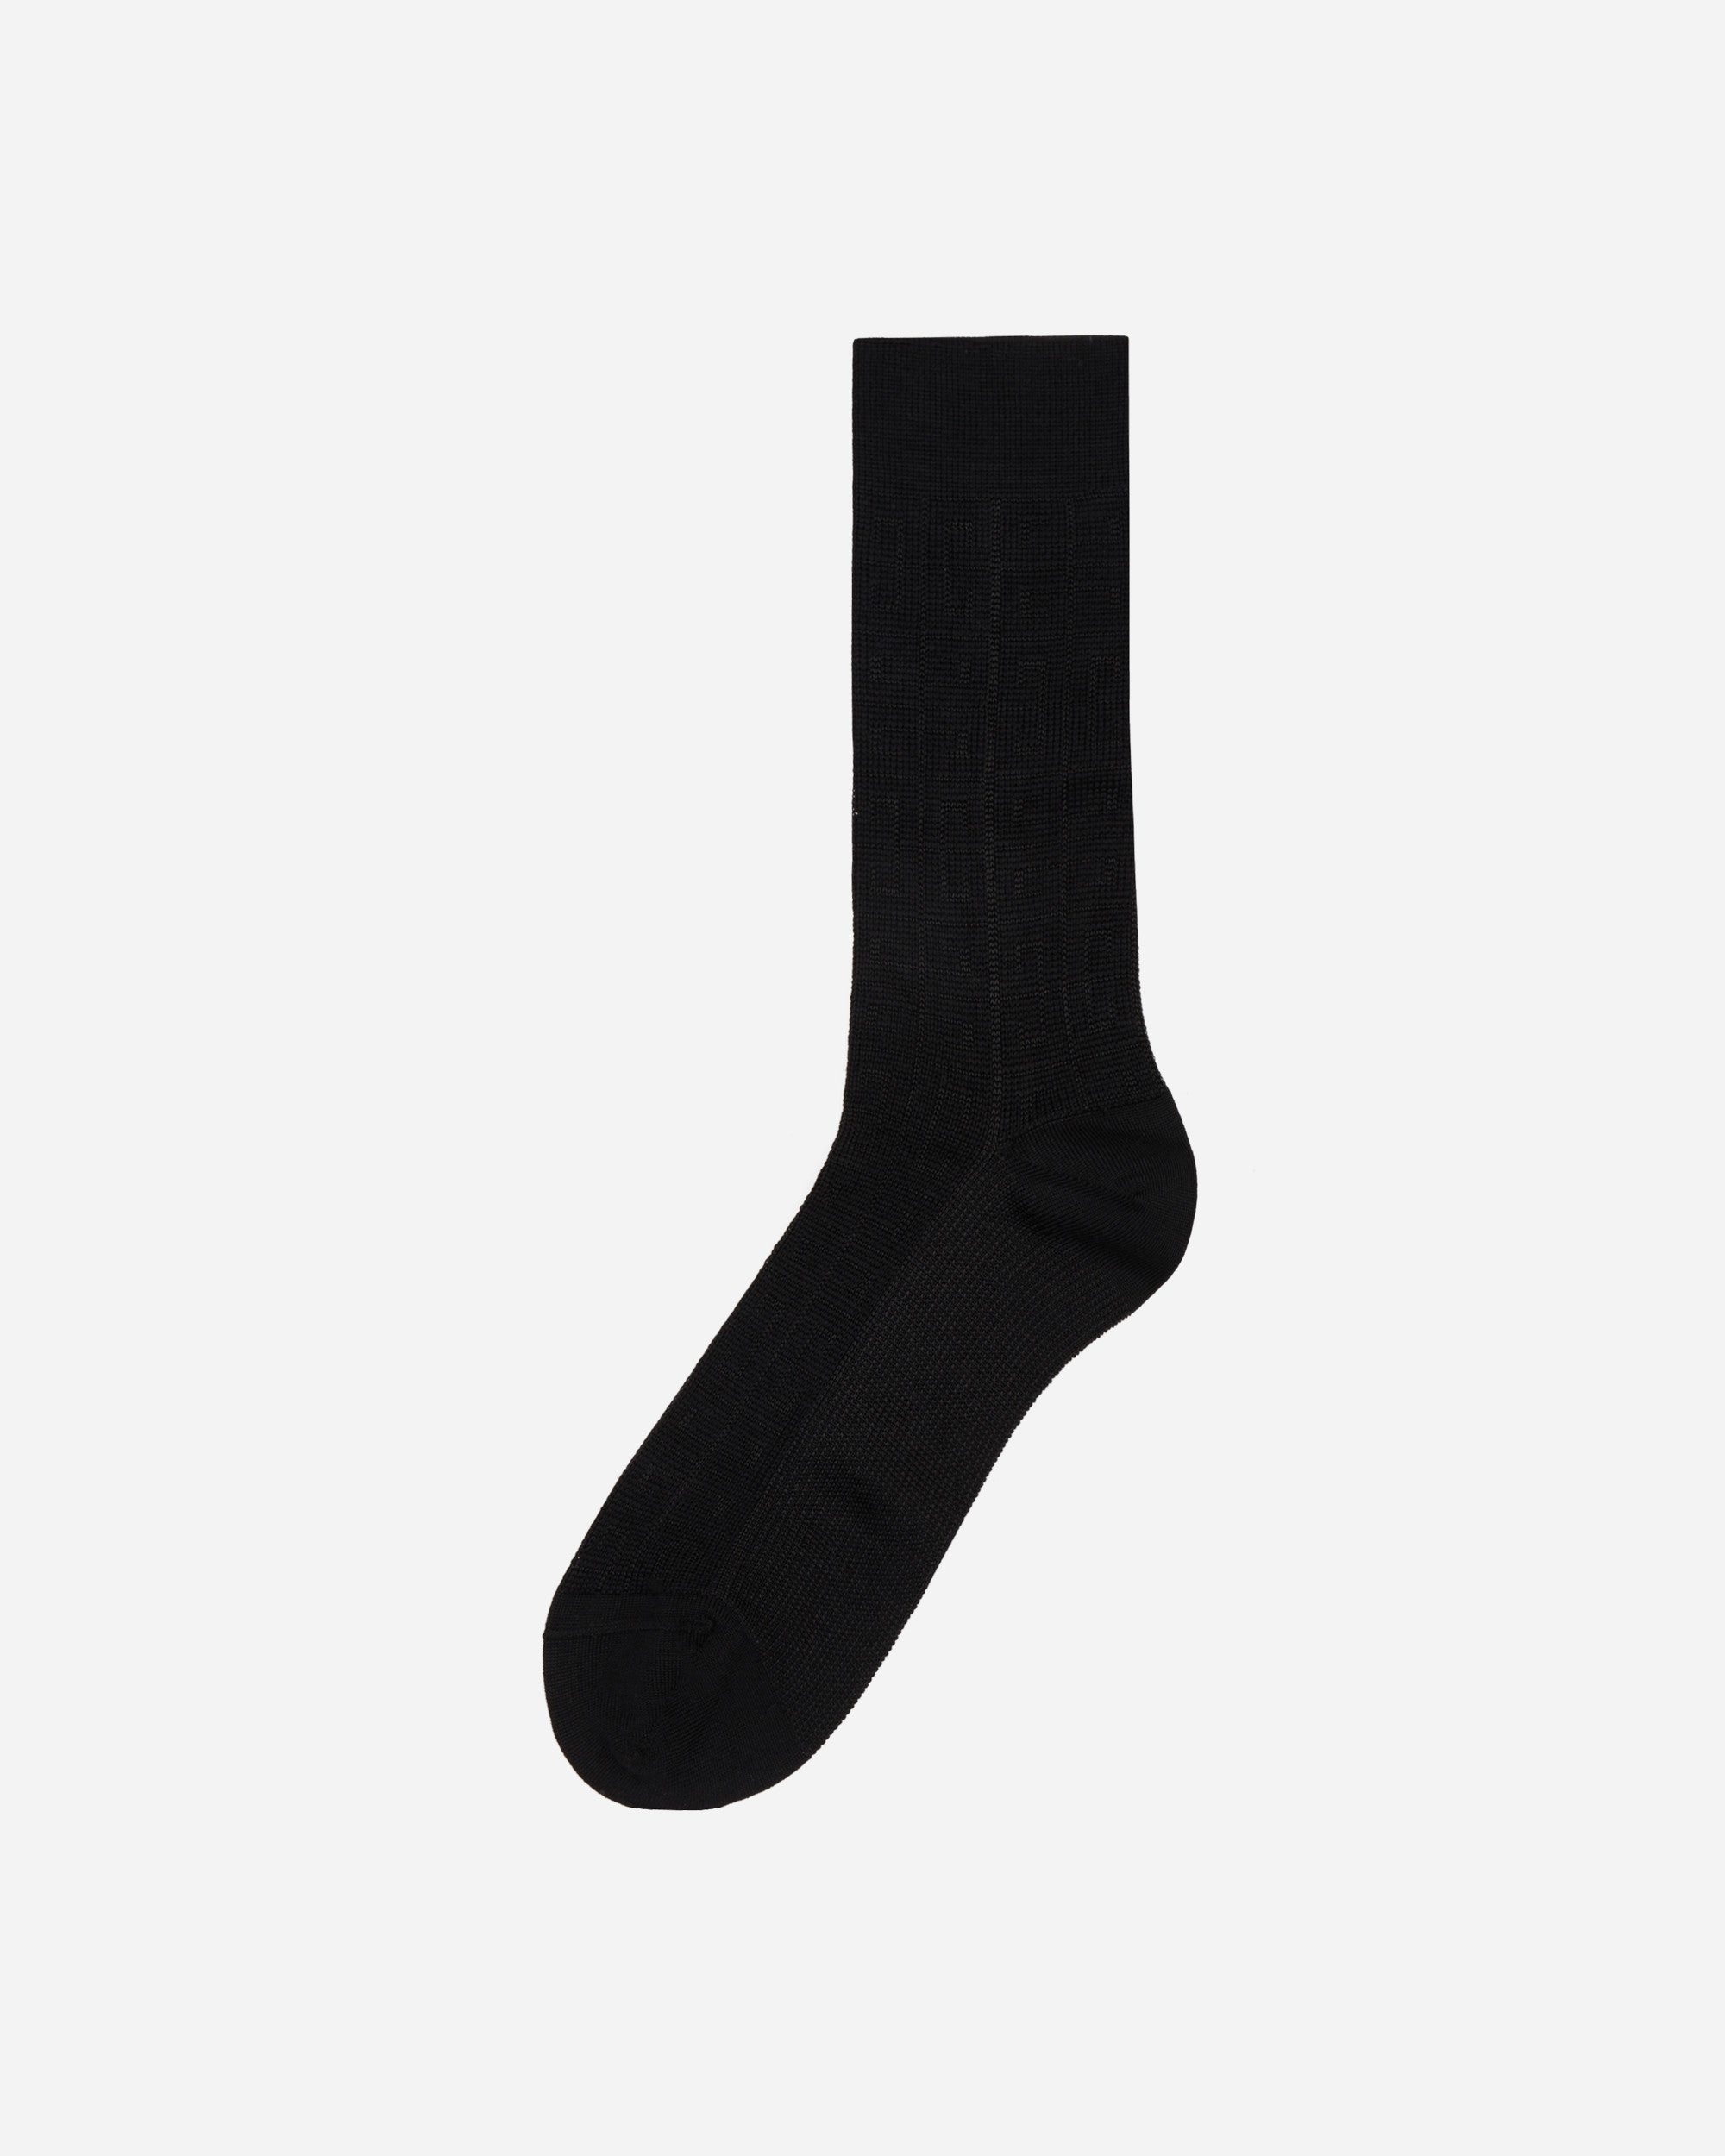 Givenchy All Over 4G Socks Black Underwear Socks BMB0324037 001